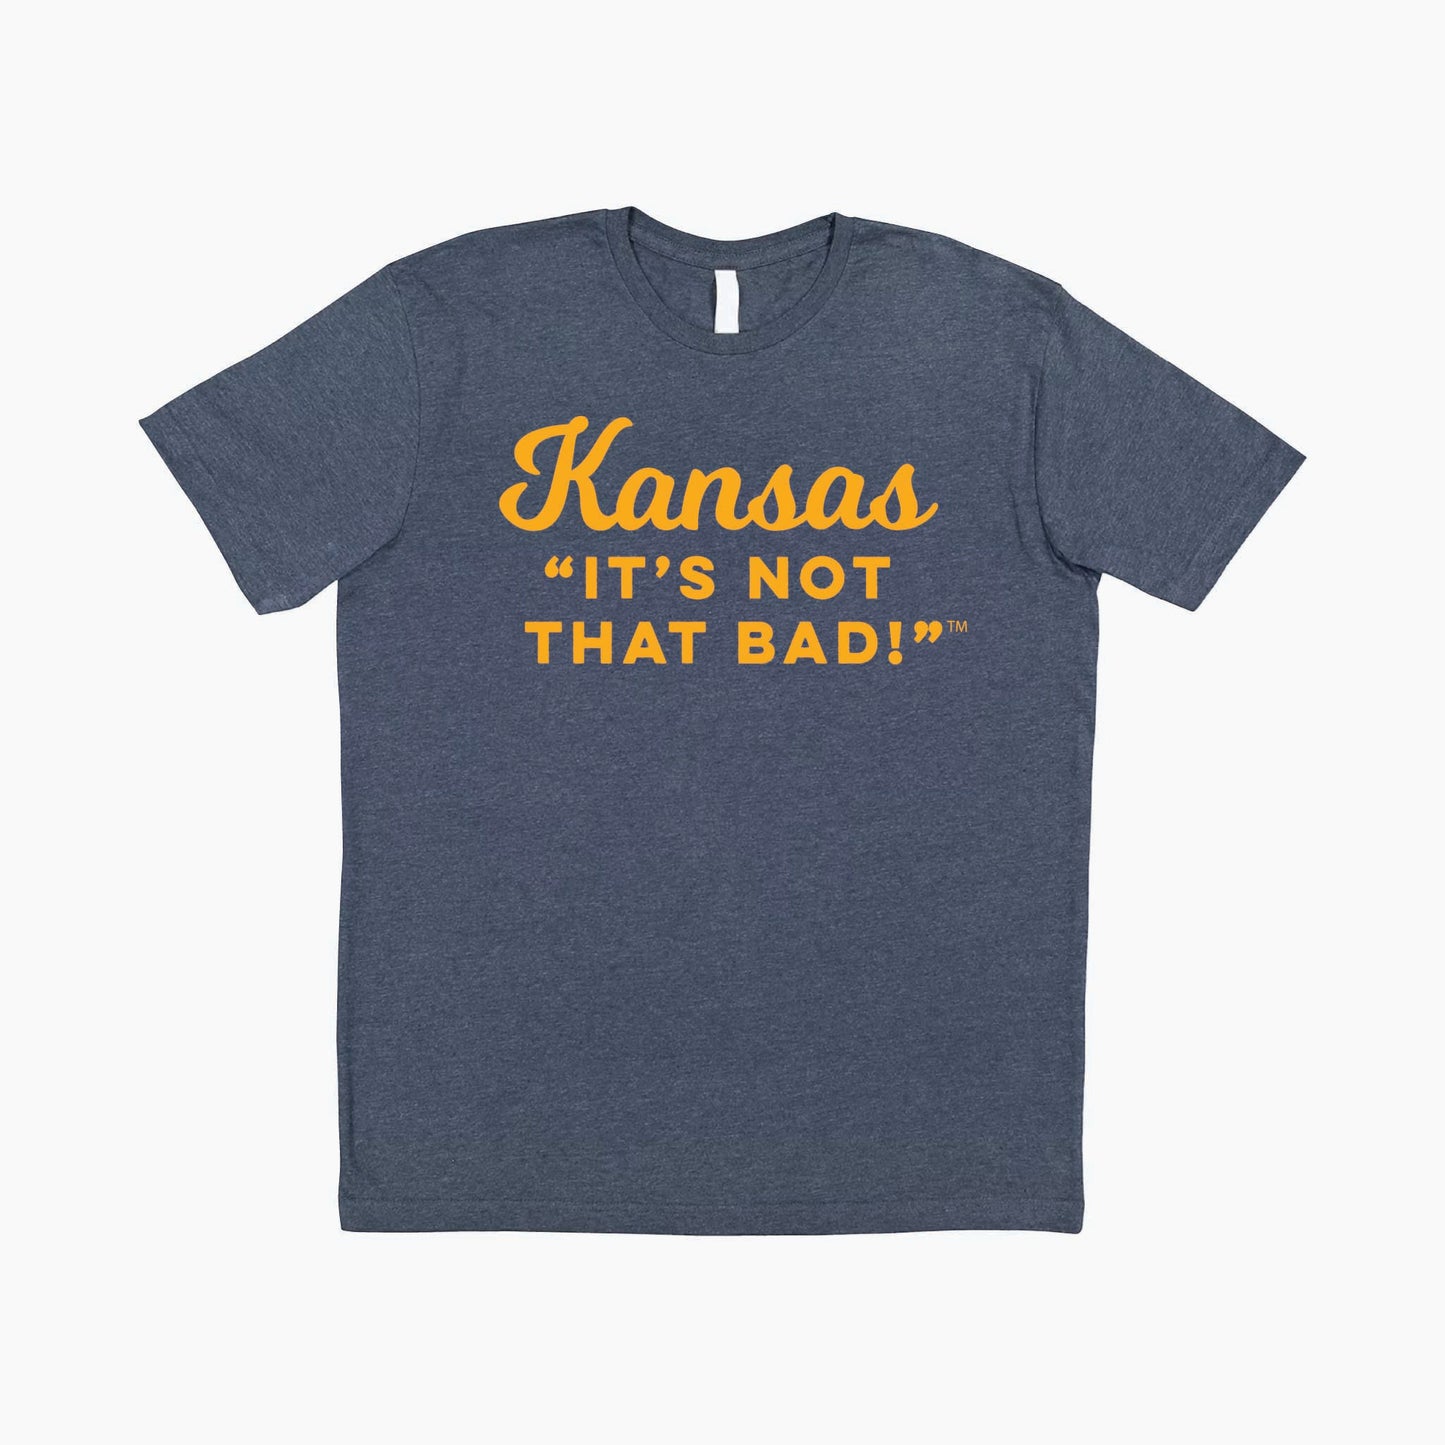 Kansas "It's Not That Bad!" Navy Tee